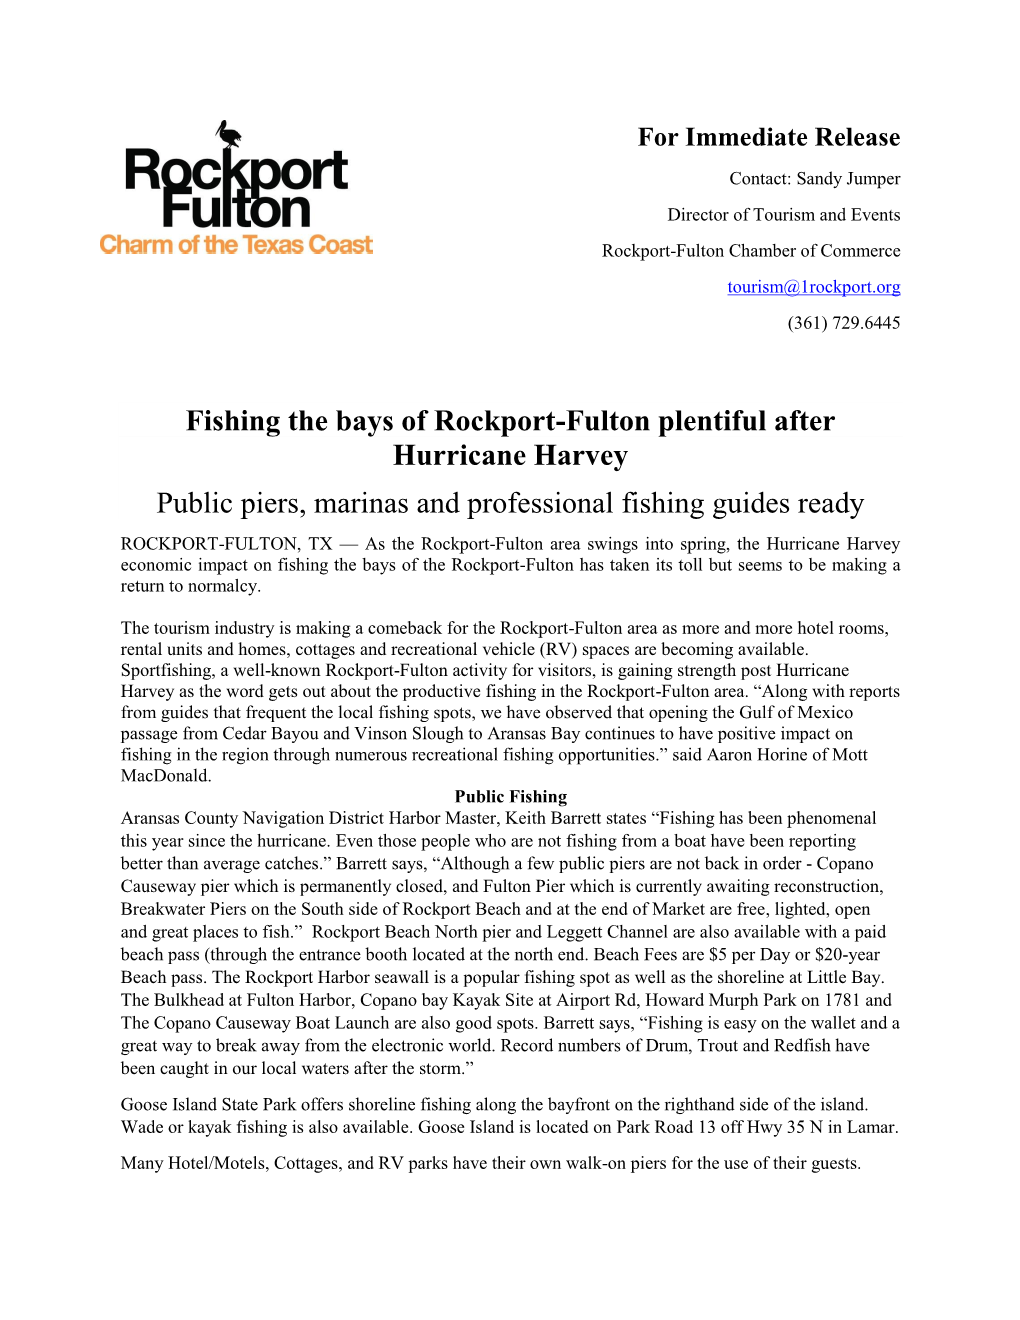 Fishing the Bays of Rockport-Fulton Plentiful After Hurricane Harvey